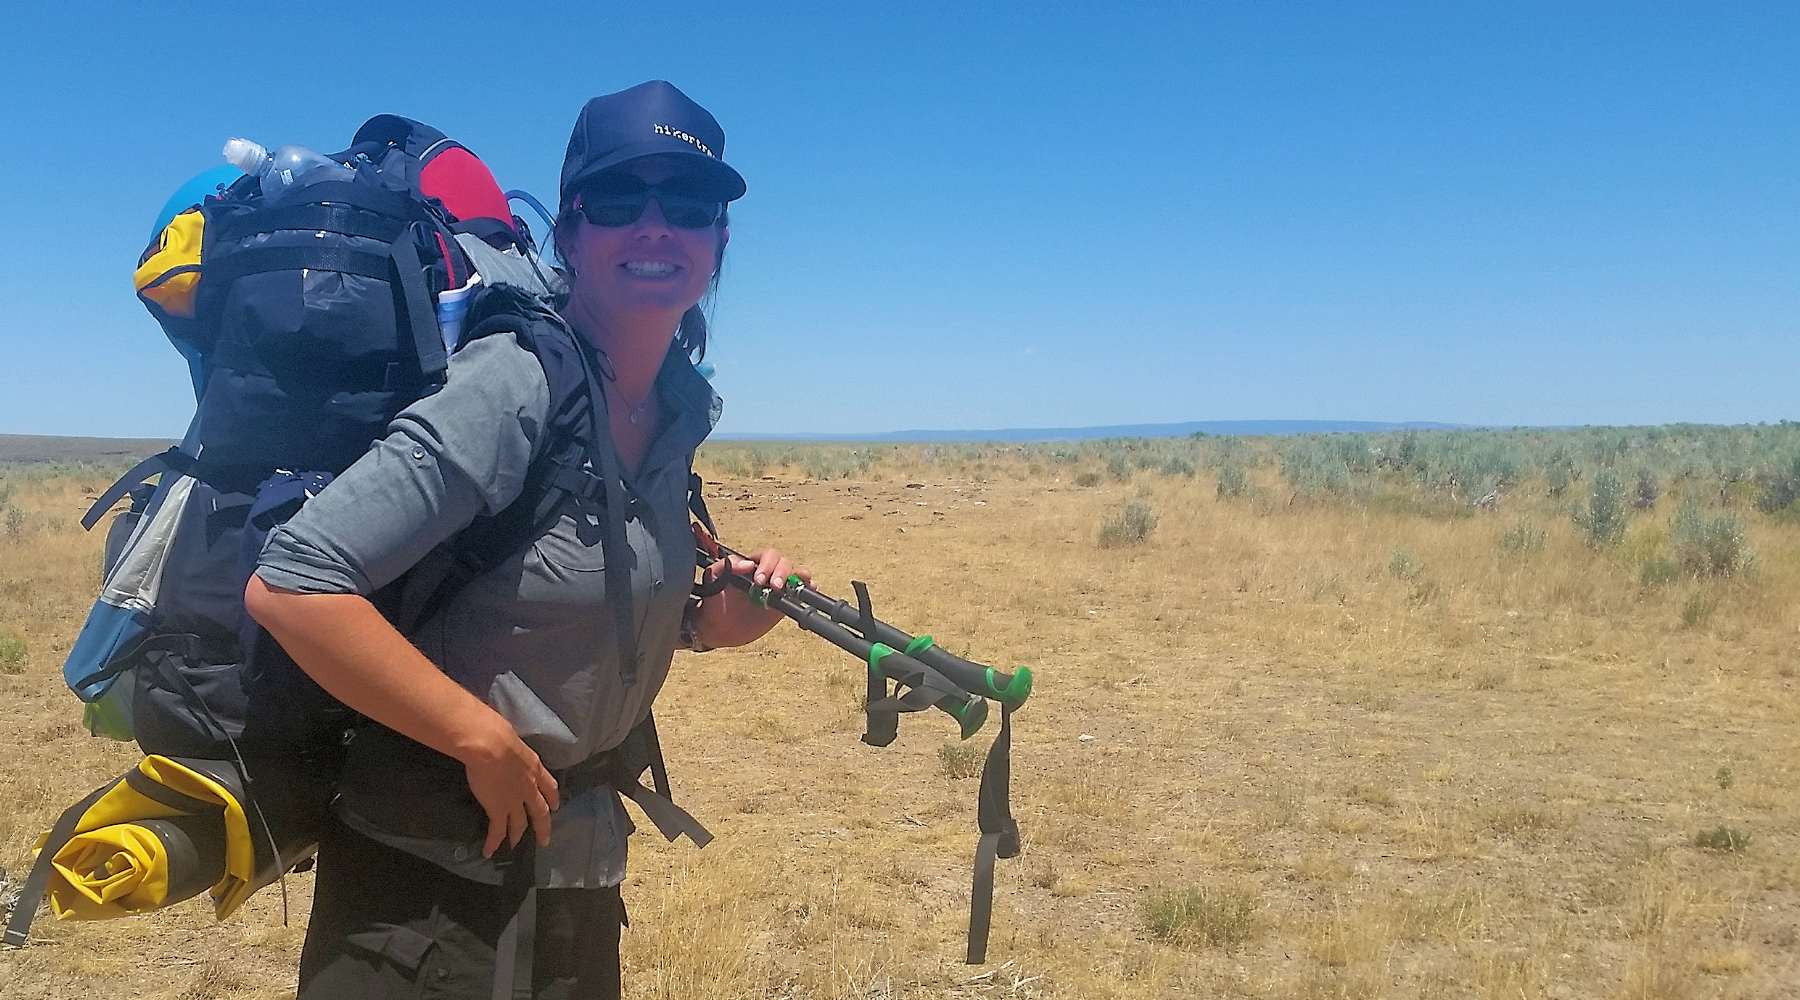 Renee "She-Ra" Patrick Completes Oregon Desert Trail